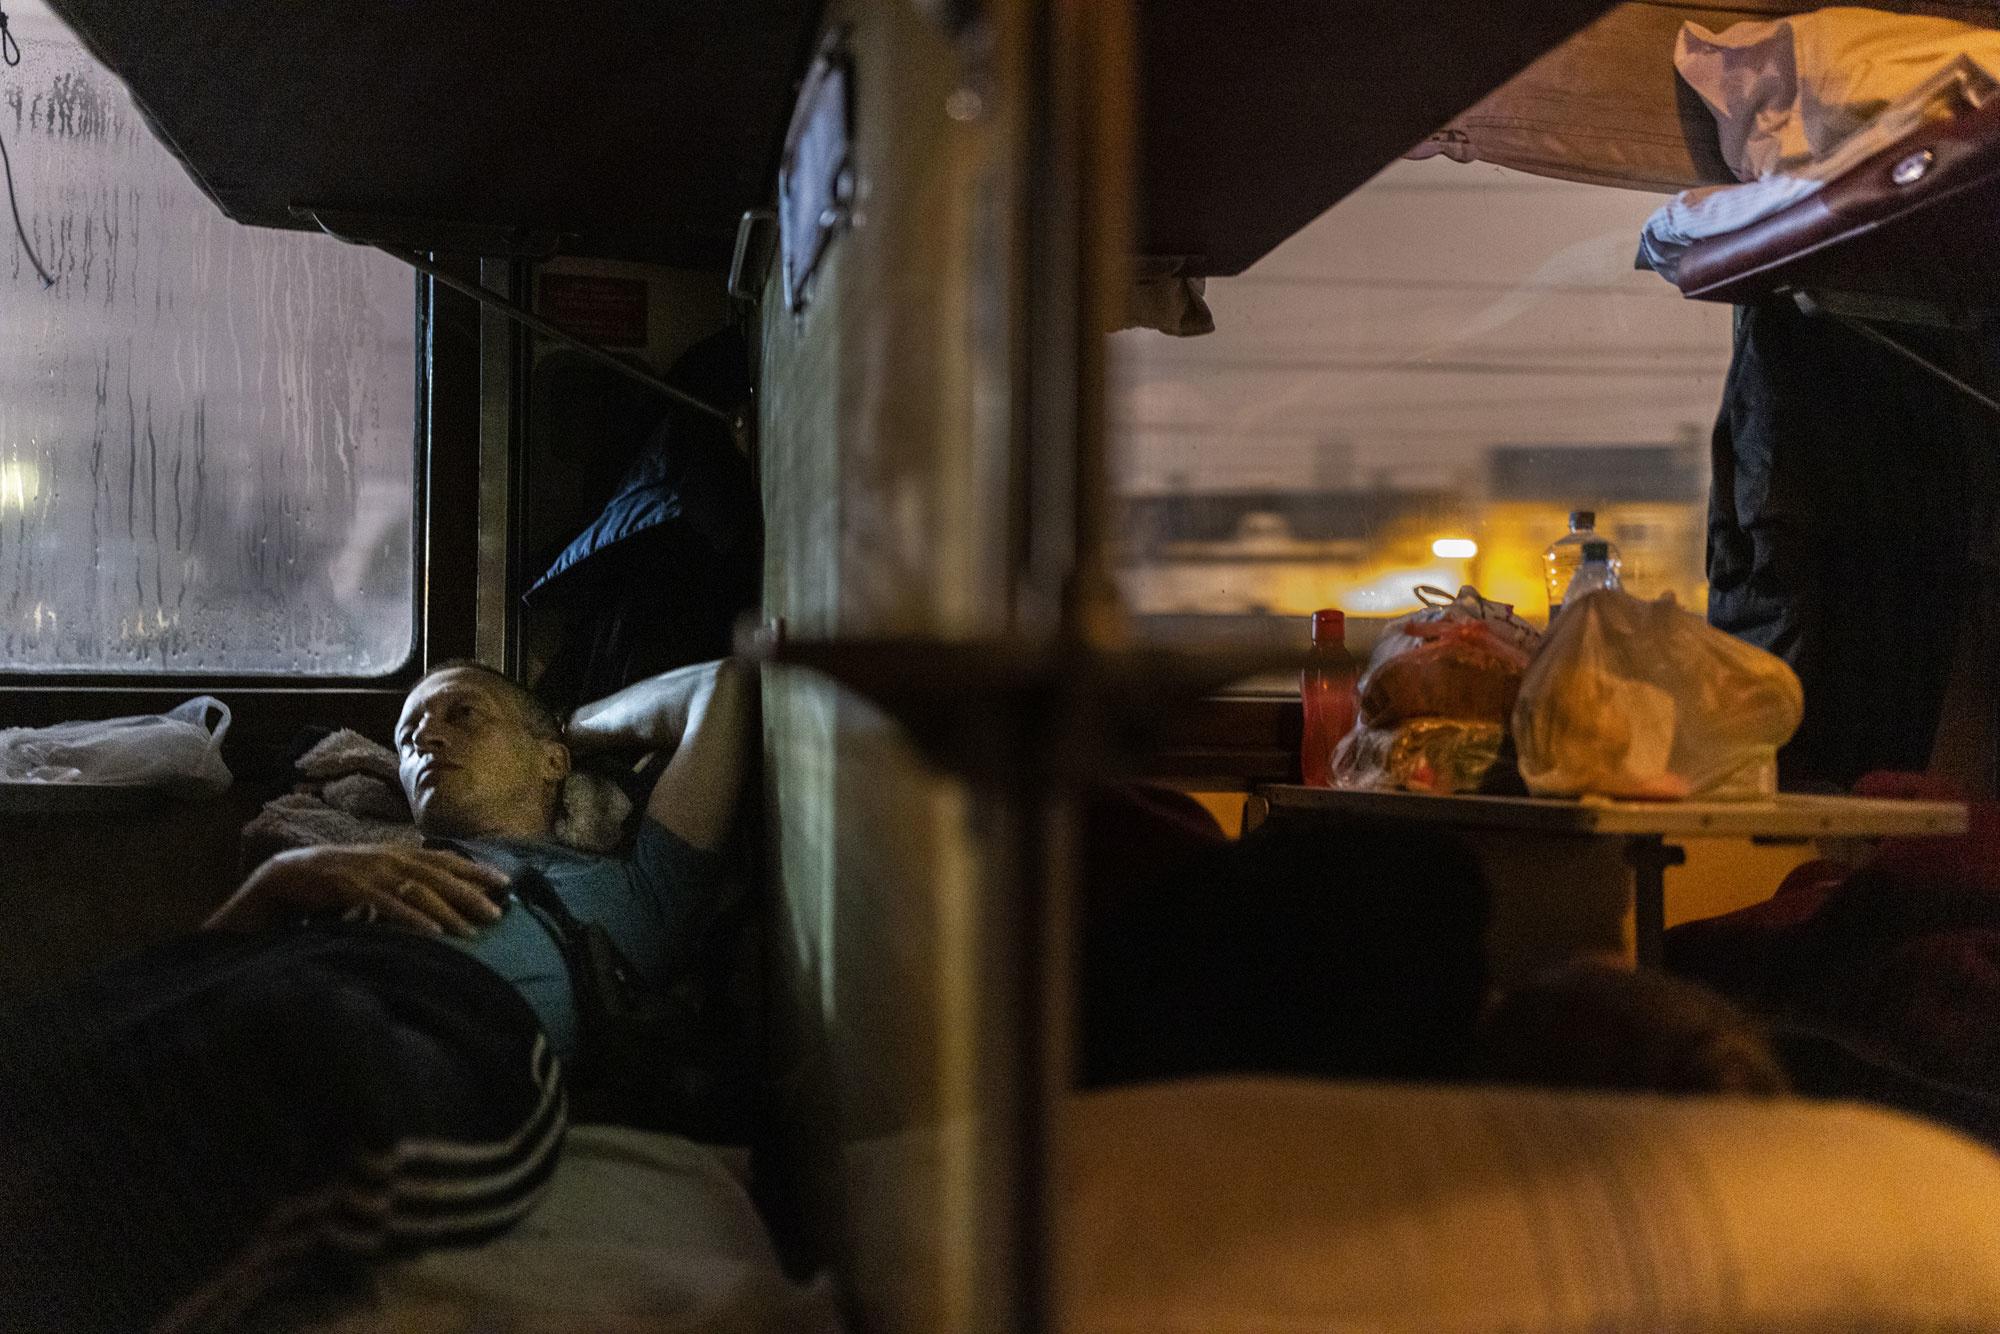 Knack-fotograaf Franky Verdickt in Oekraïne: 'Een trein vol trauma'